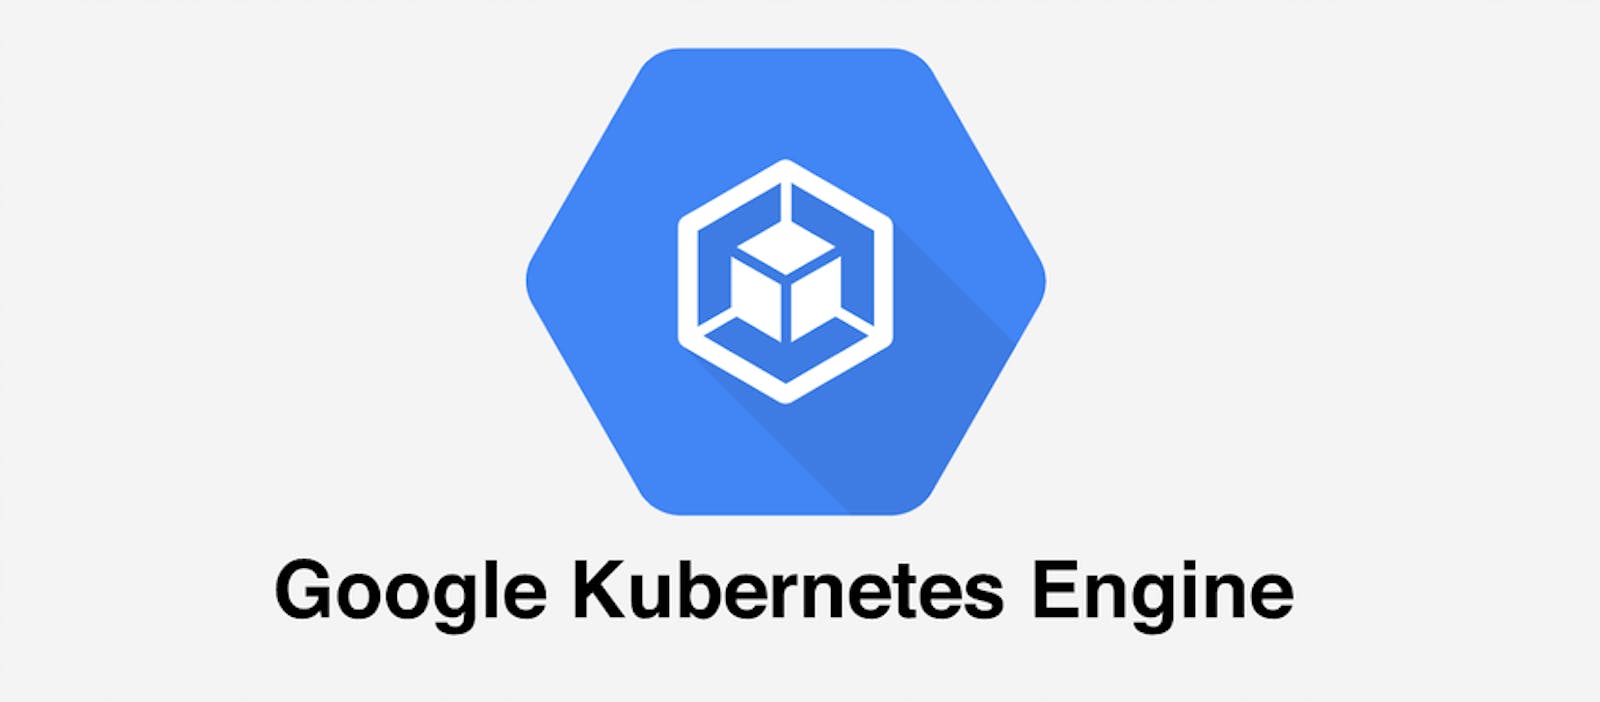 17. Setting up your Google Kubernetes Cluster